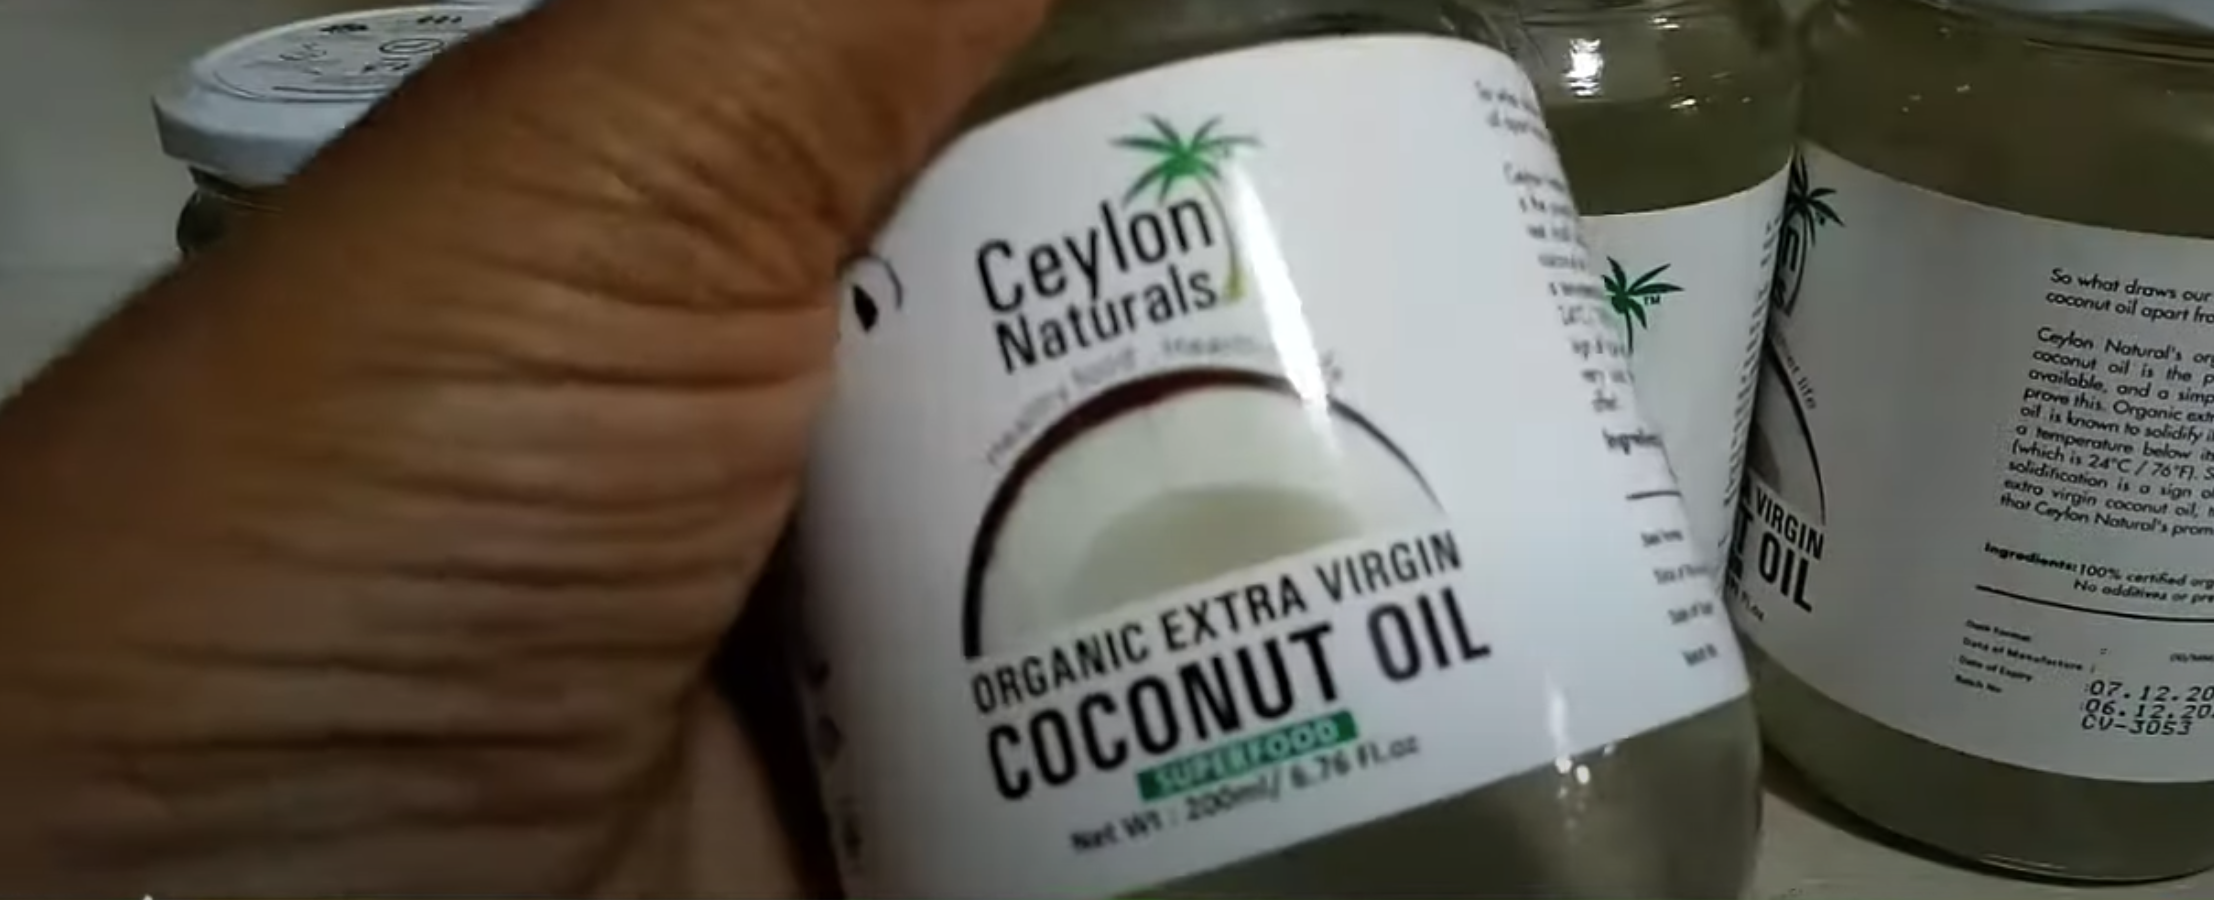 Benefits of Extra Virgin Coconut Oil